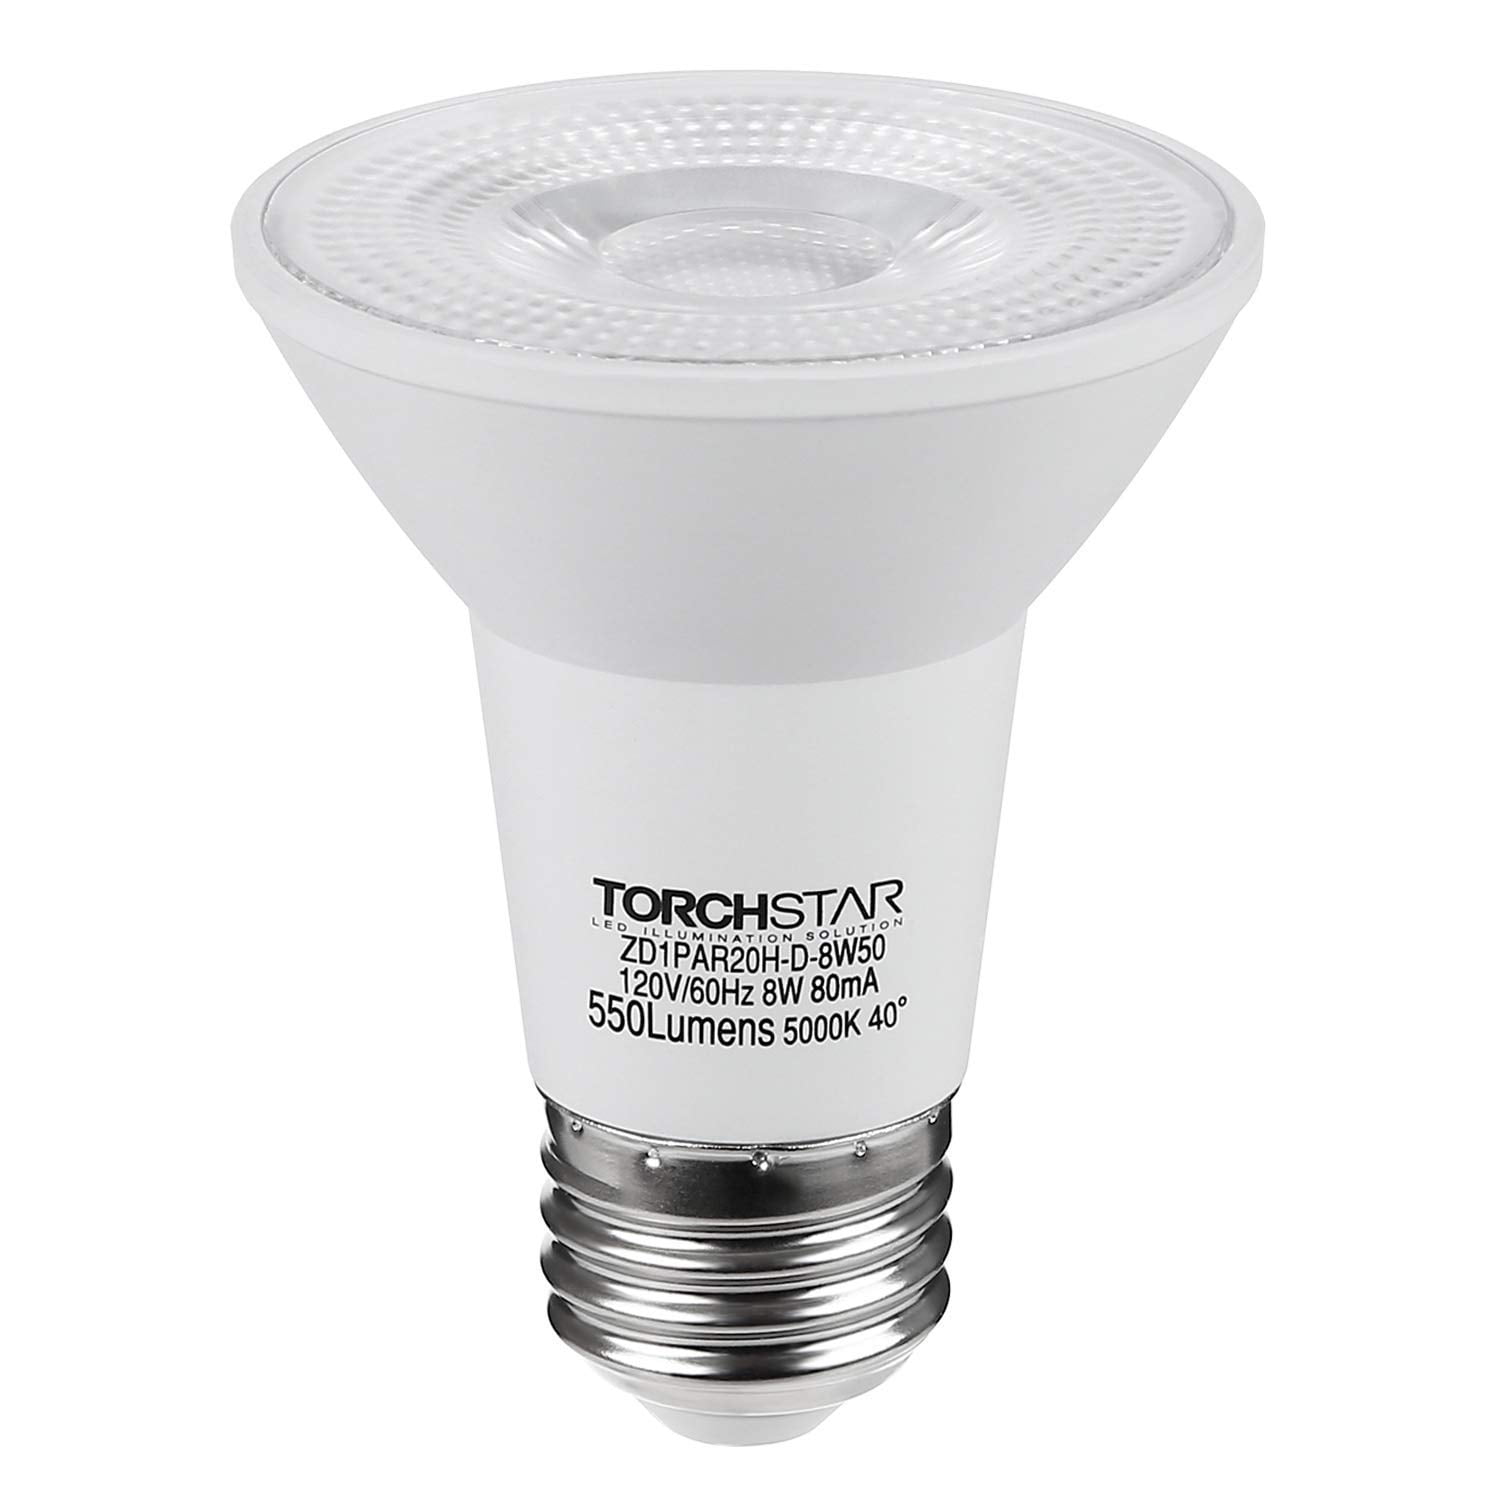 TORCHSTAR Dimmable PAR20 LED Light Bulbs for Recessed Lighting, Track